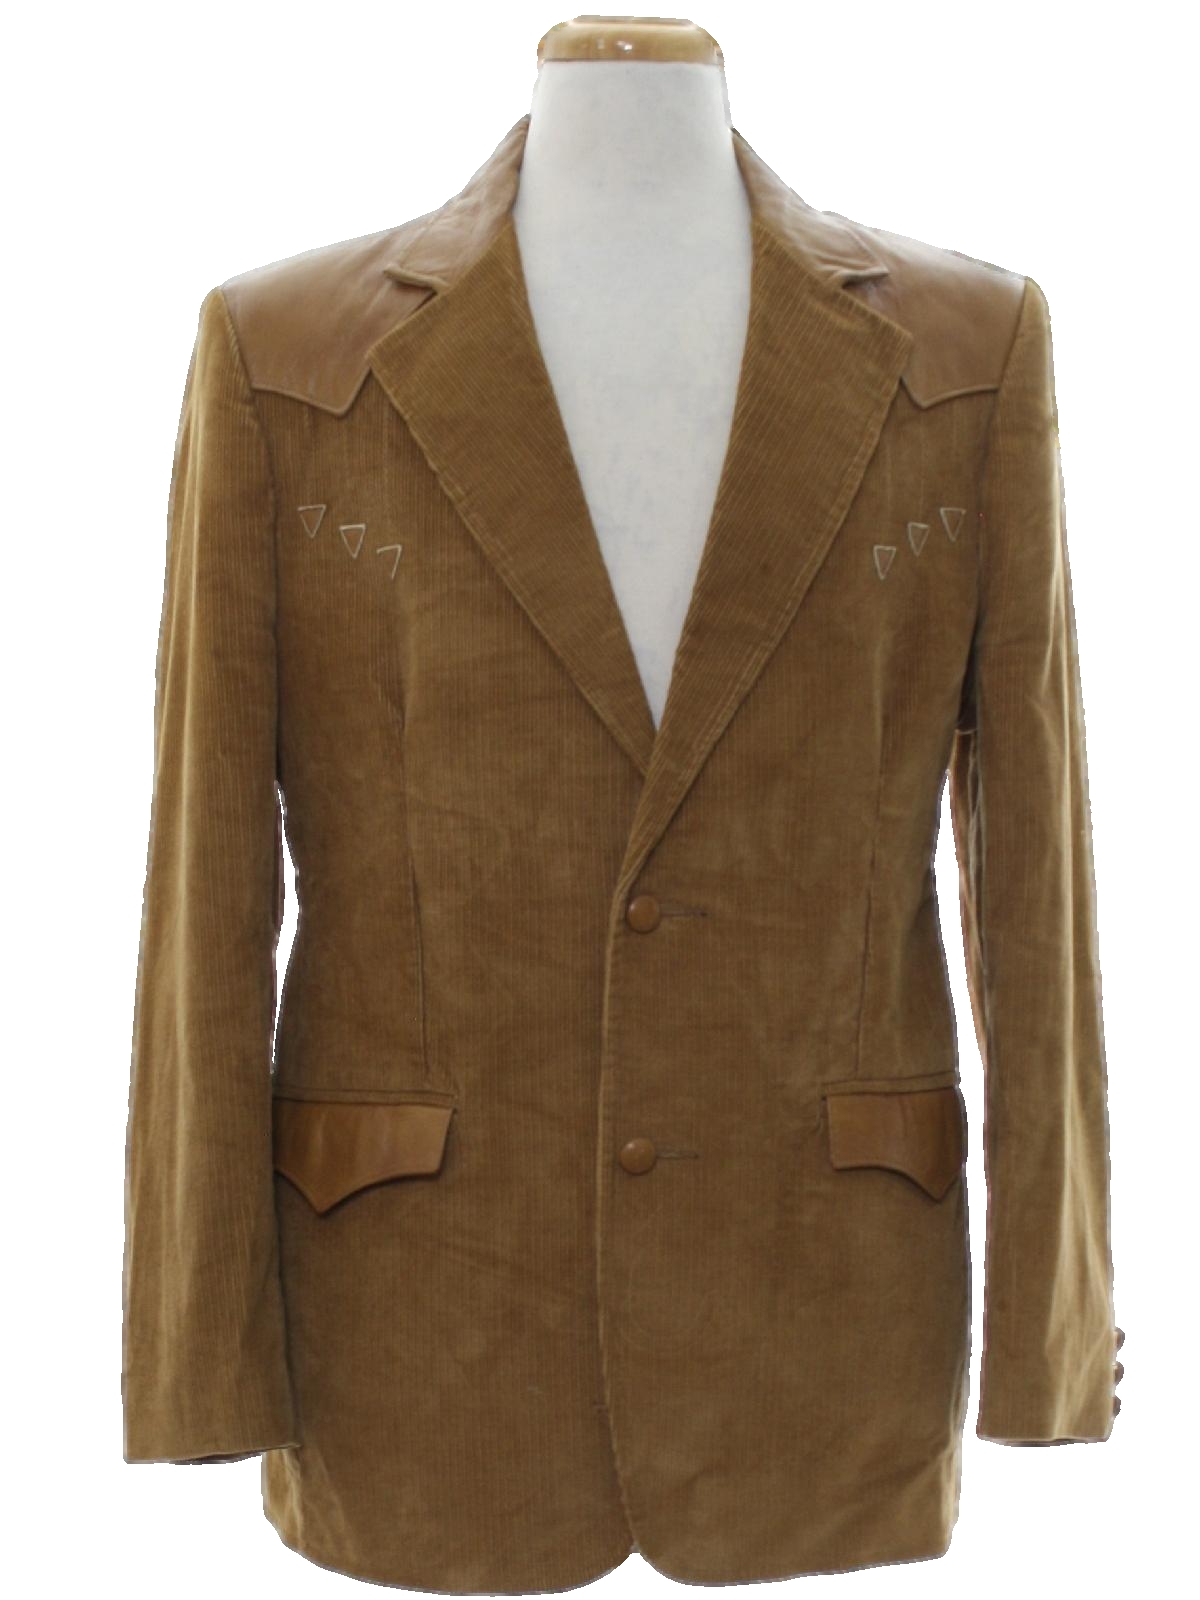 Retro 70's Jacket: 70s -Pioneerwear- Mens tan background cotton ...